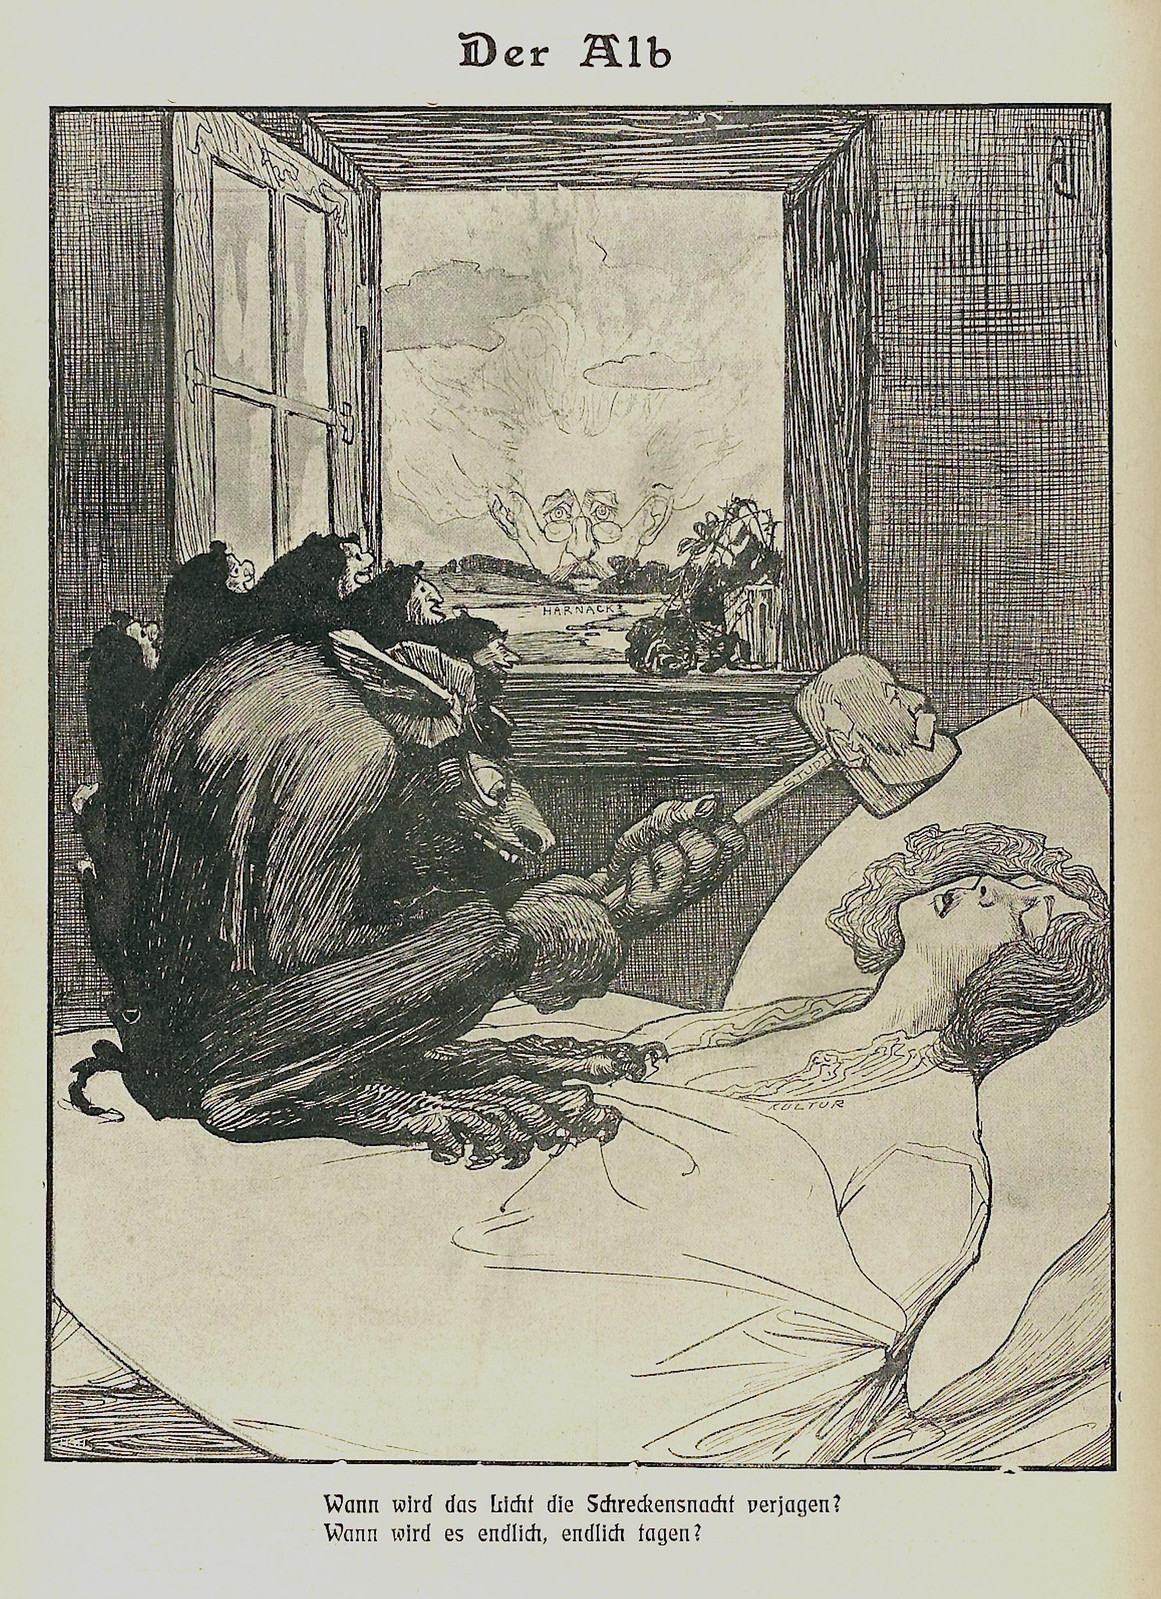 Kladderadatsch, Interior art by A.L?, 1907